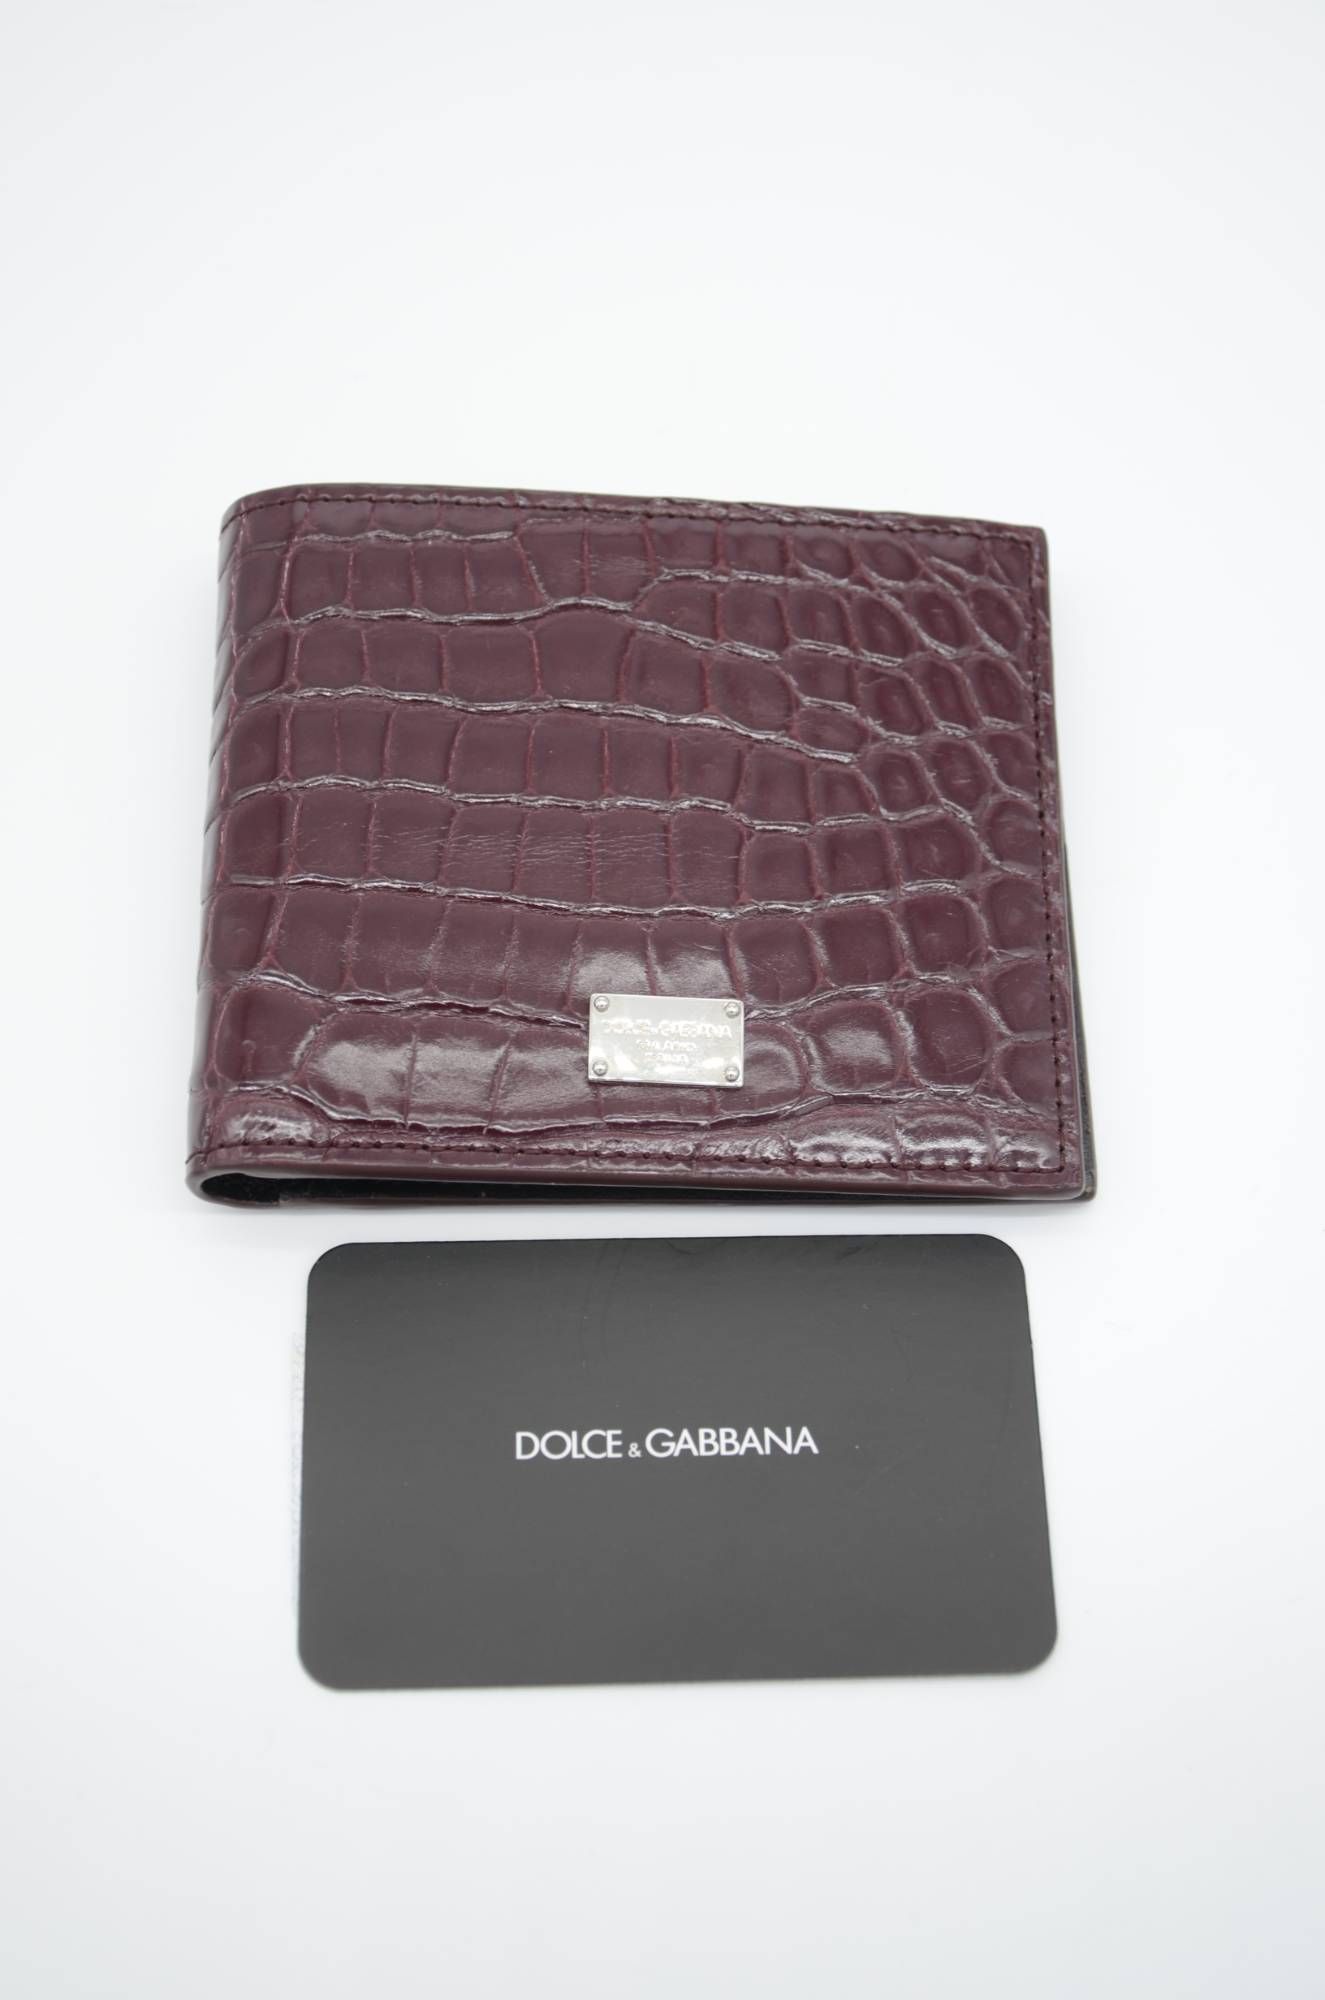 Dolce & Gabbana Men Leather Wallet
Dolce & Gabbana Plate